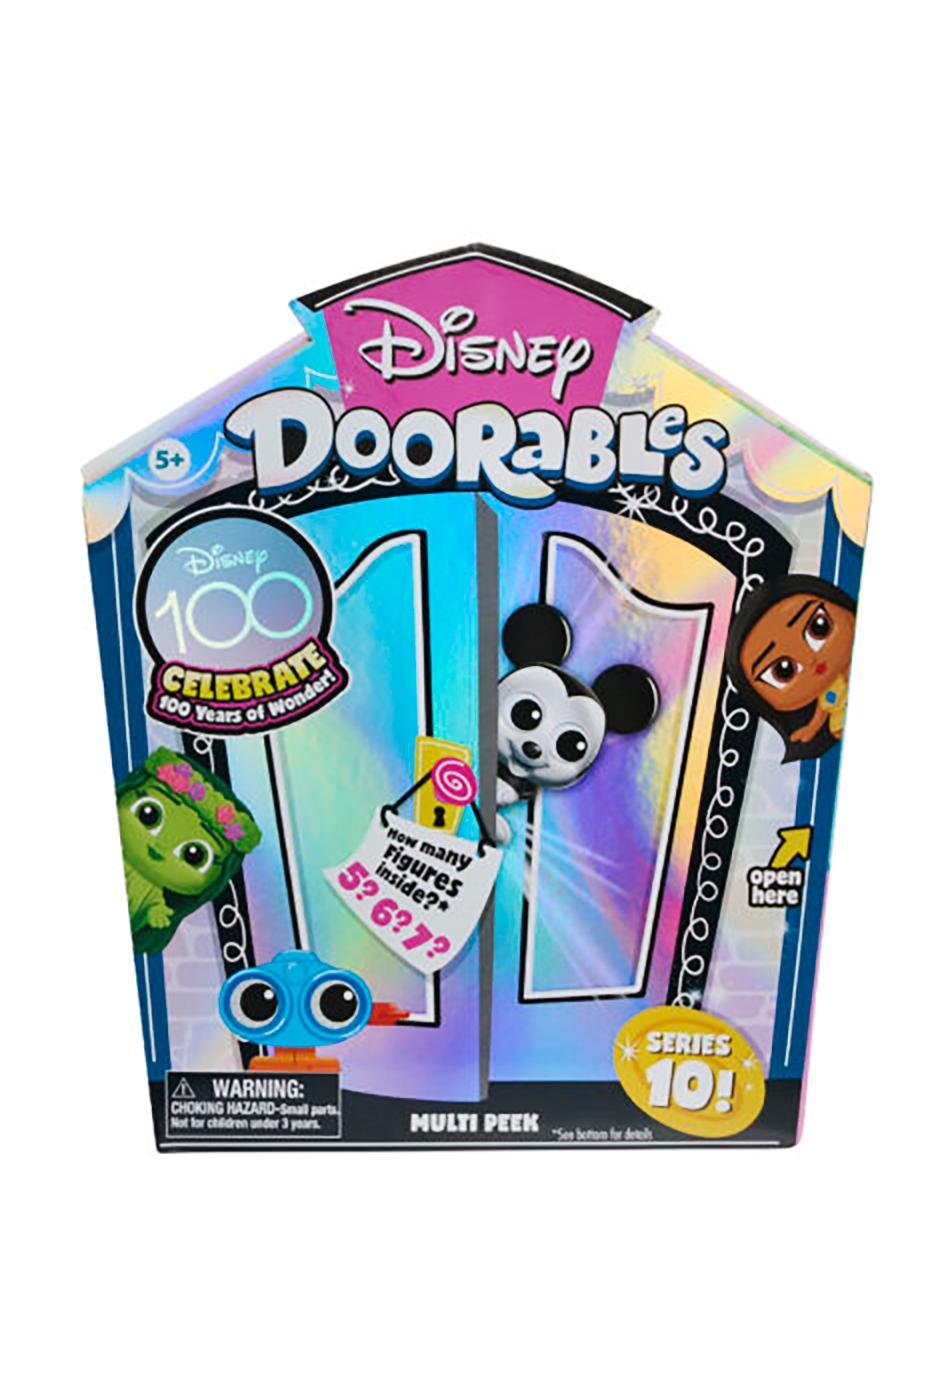 What Are Disney Doorables?